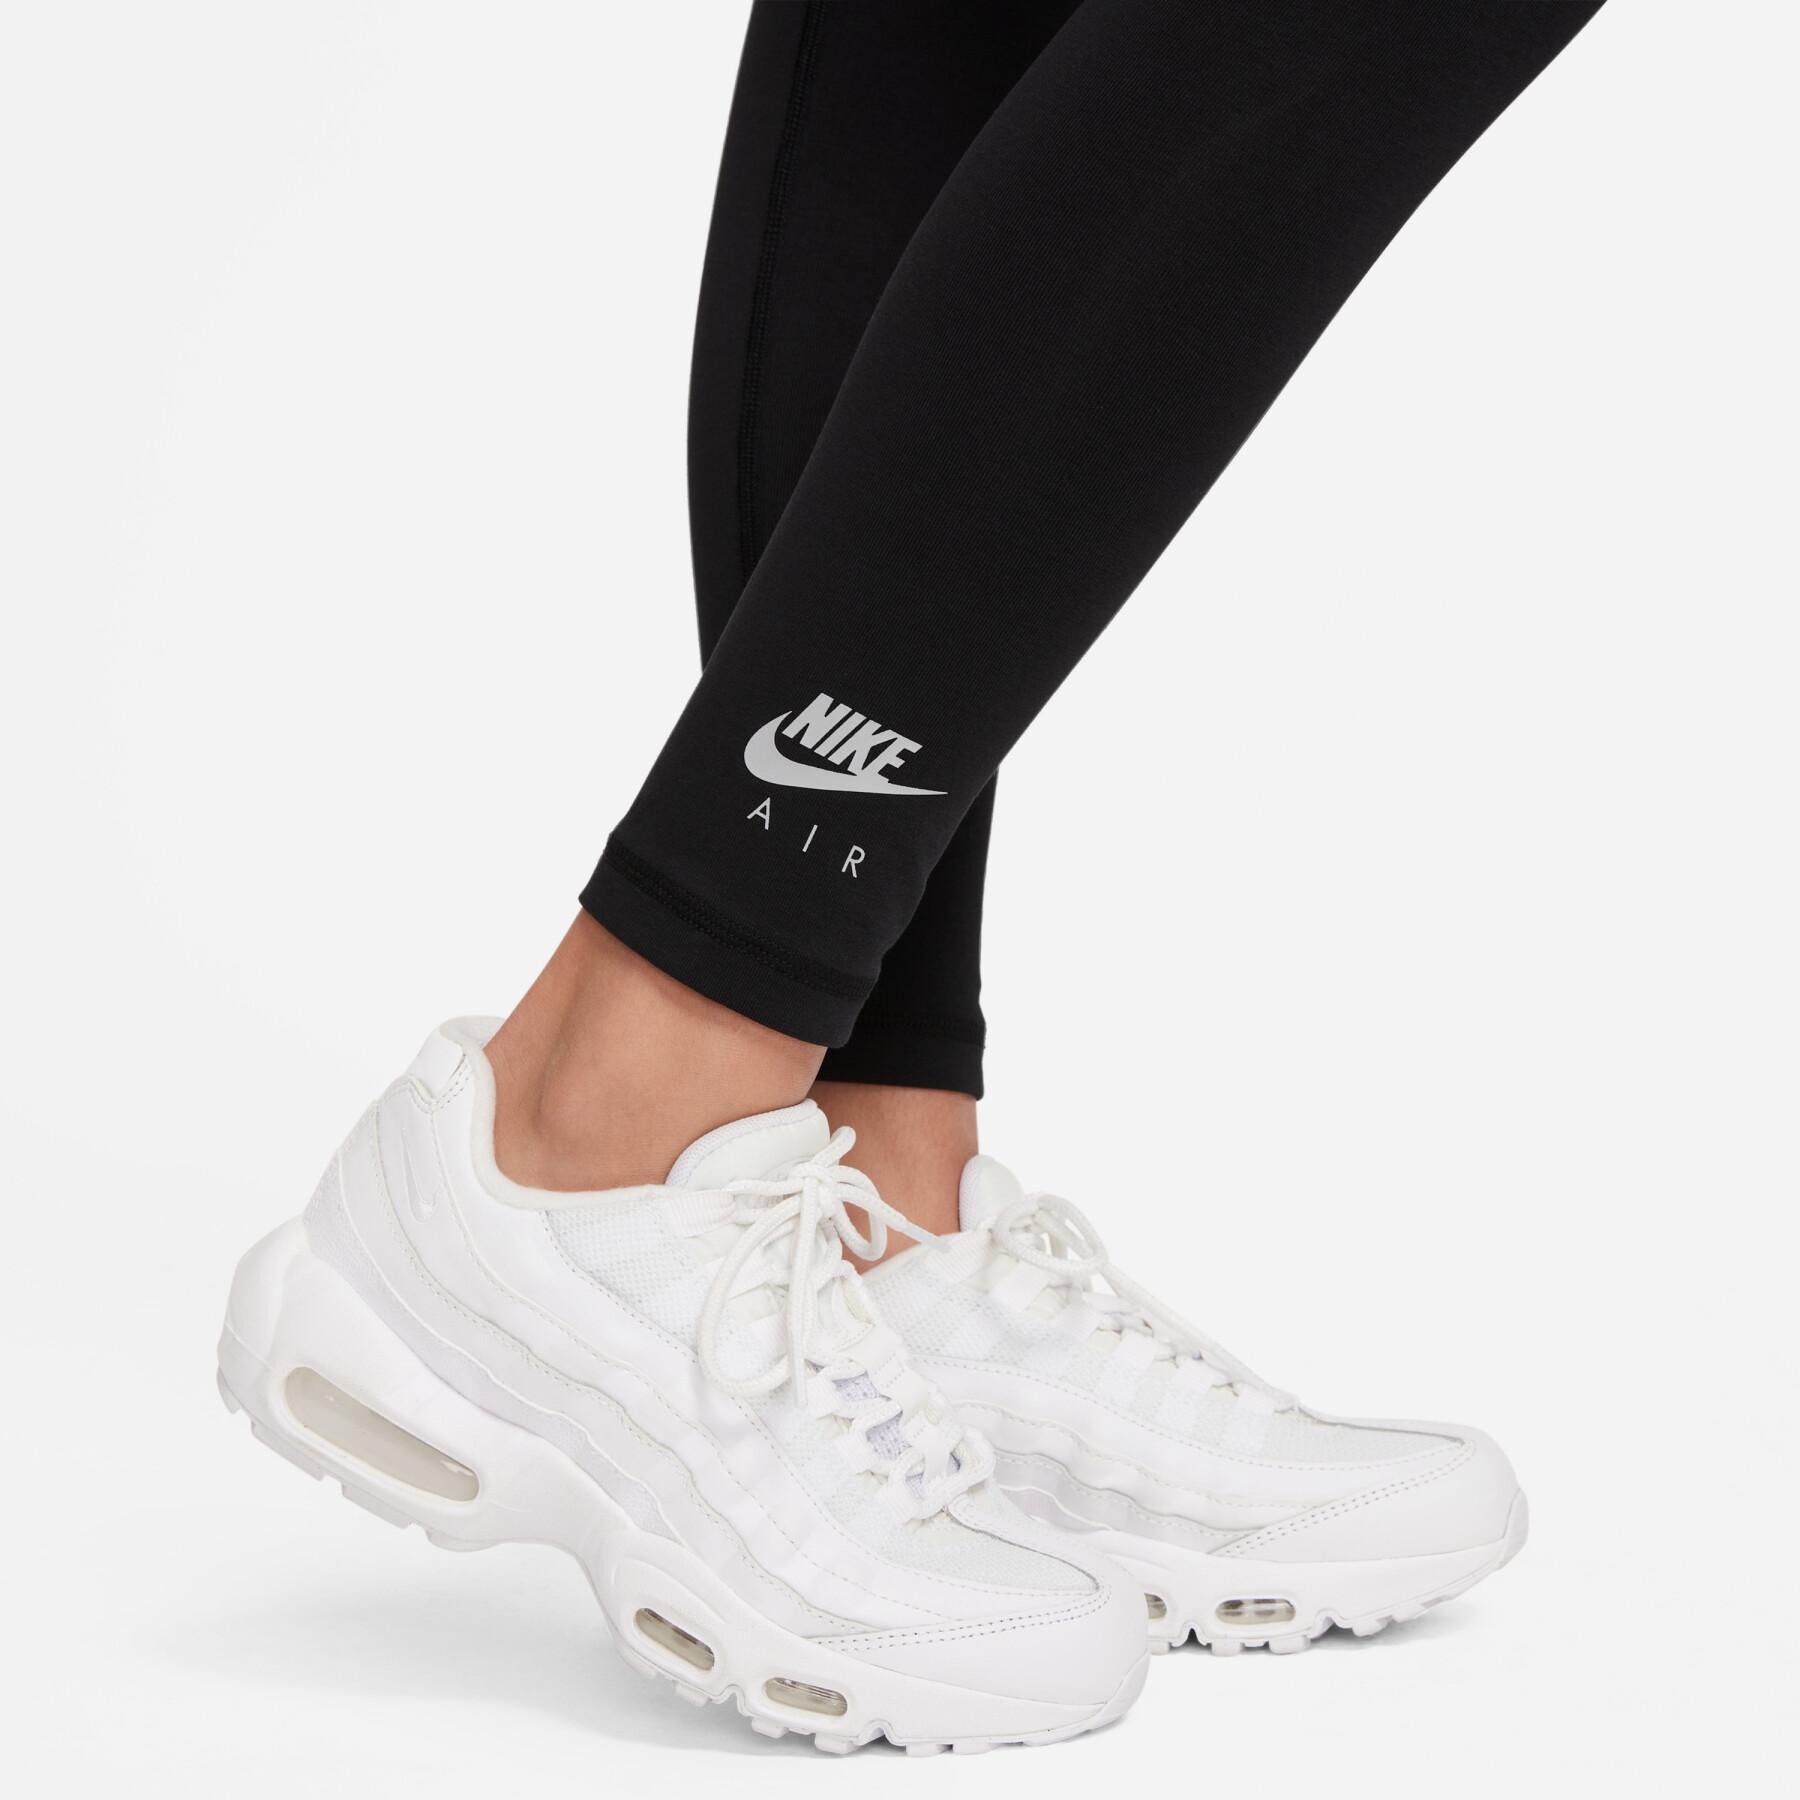 Legging girl Nike Air Essential